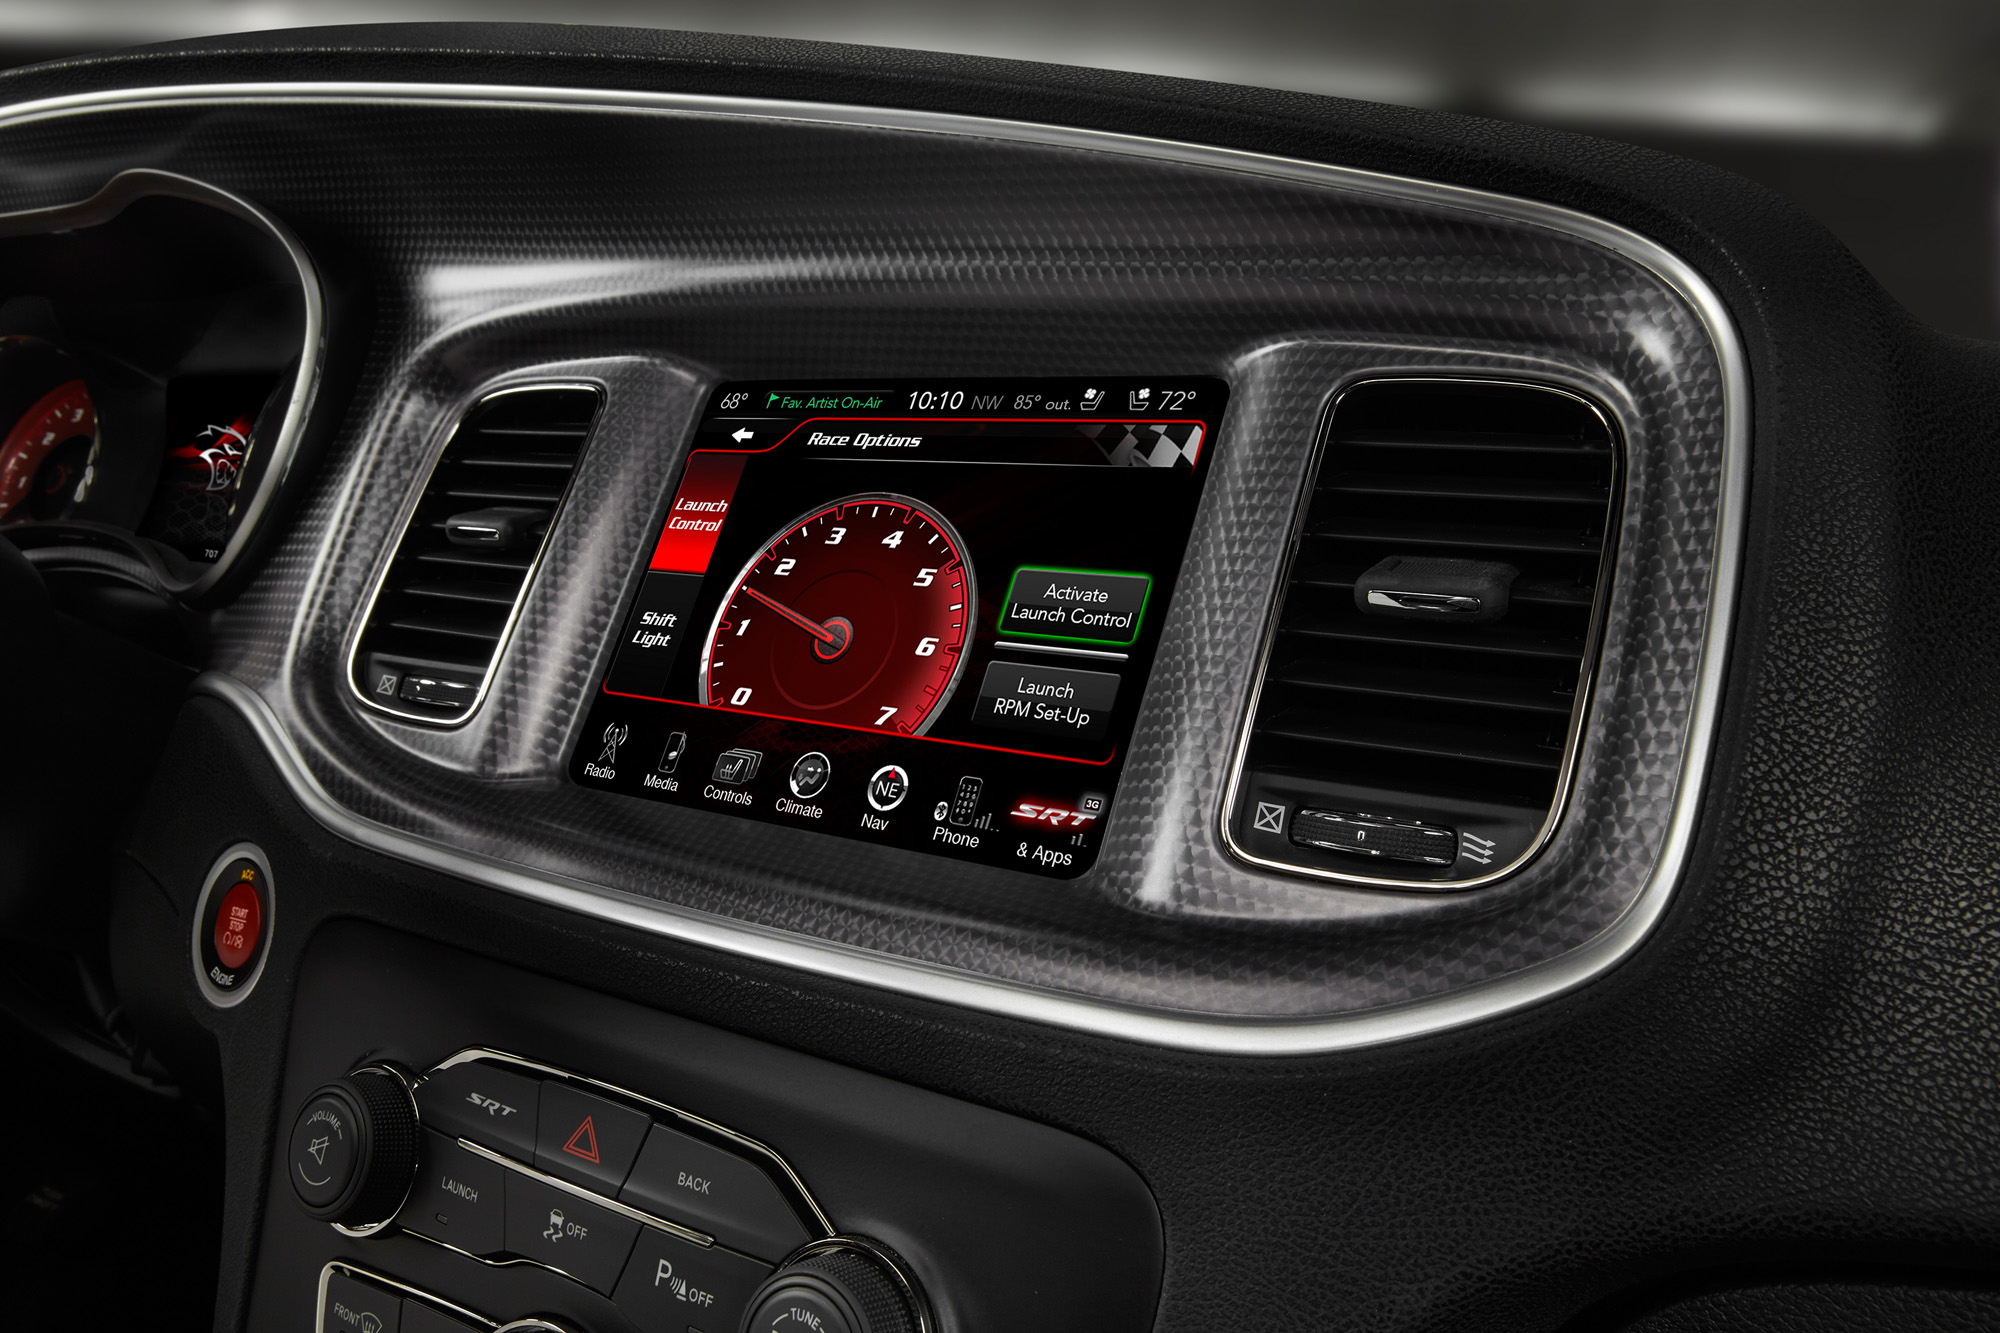 2015 Dodge Charger SRT - Race Options screen